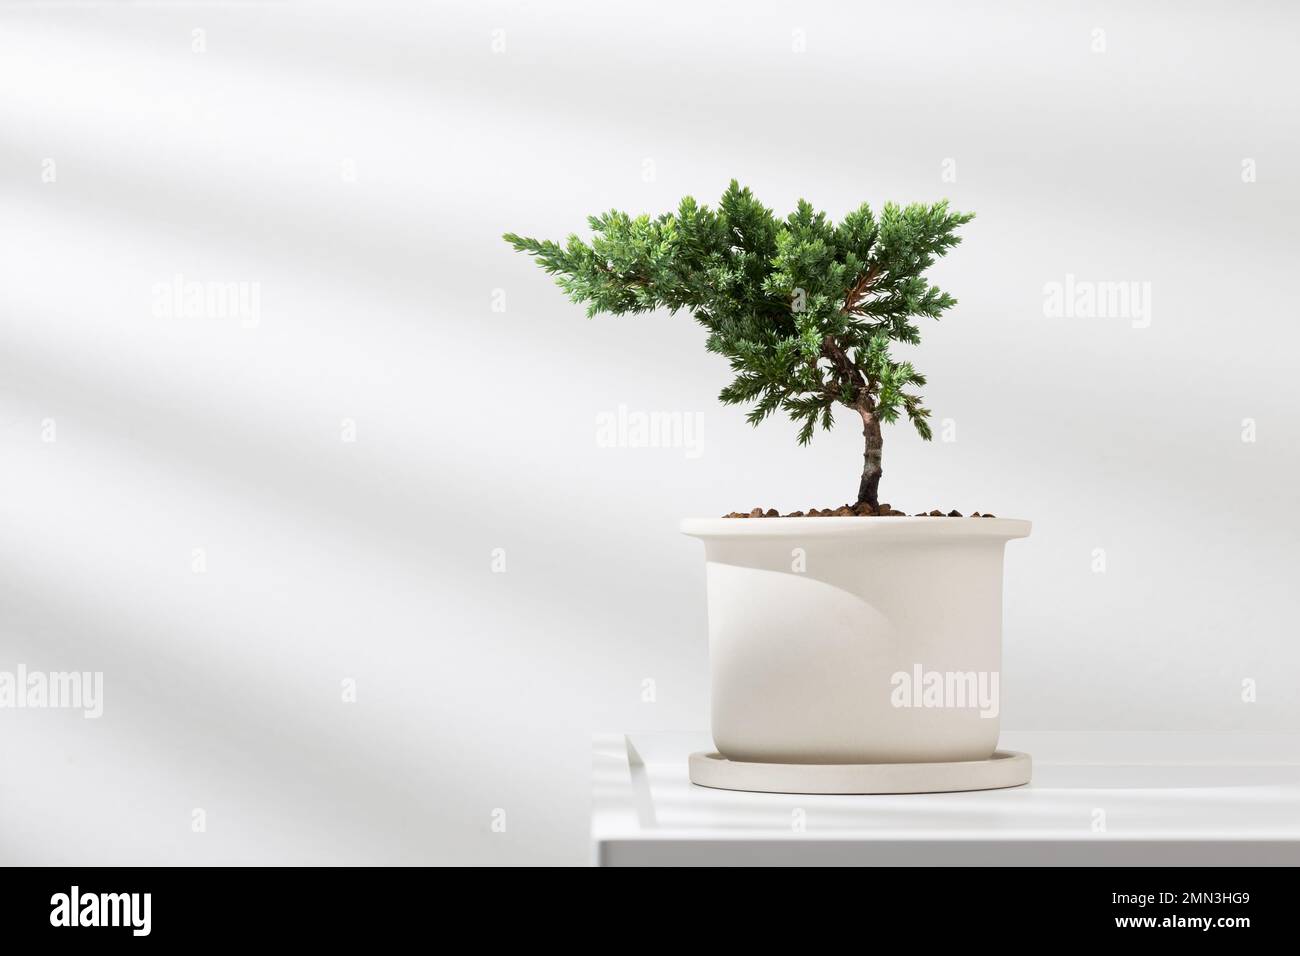 Juniperus procumbens or Creeping Juniper in a white ceramic pot. Stock Photo